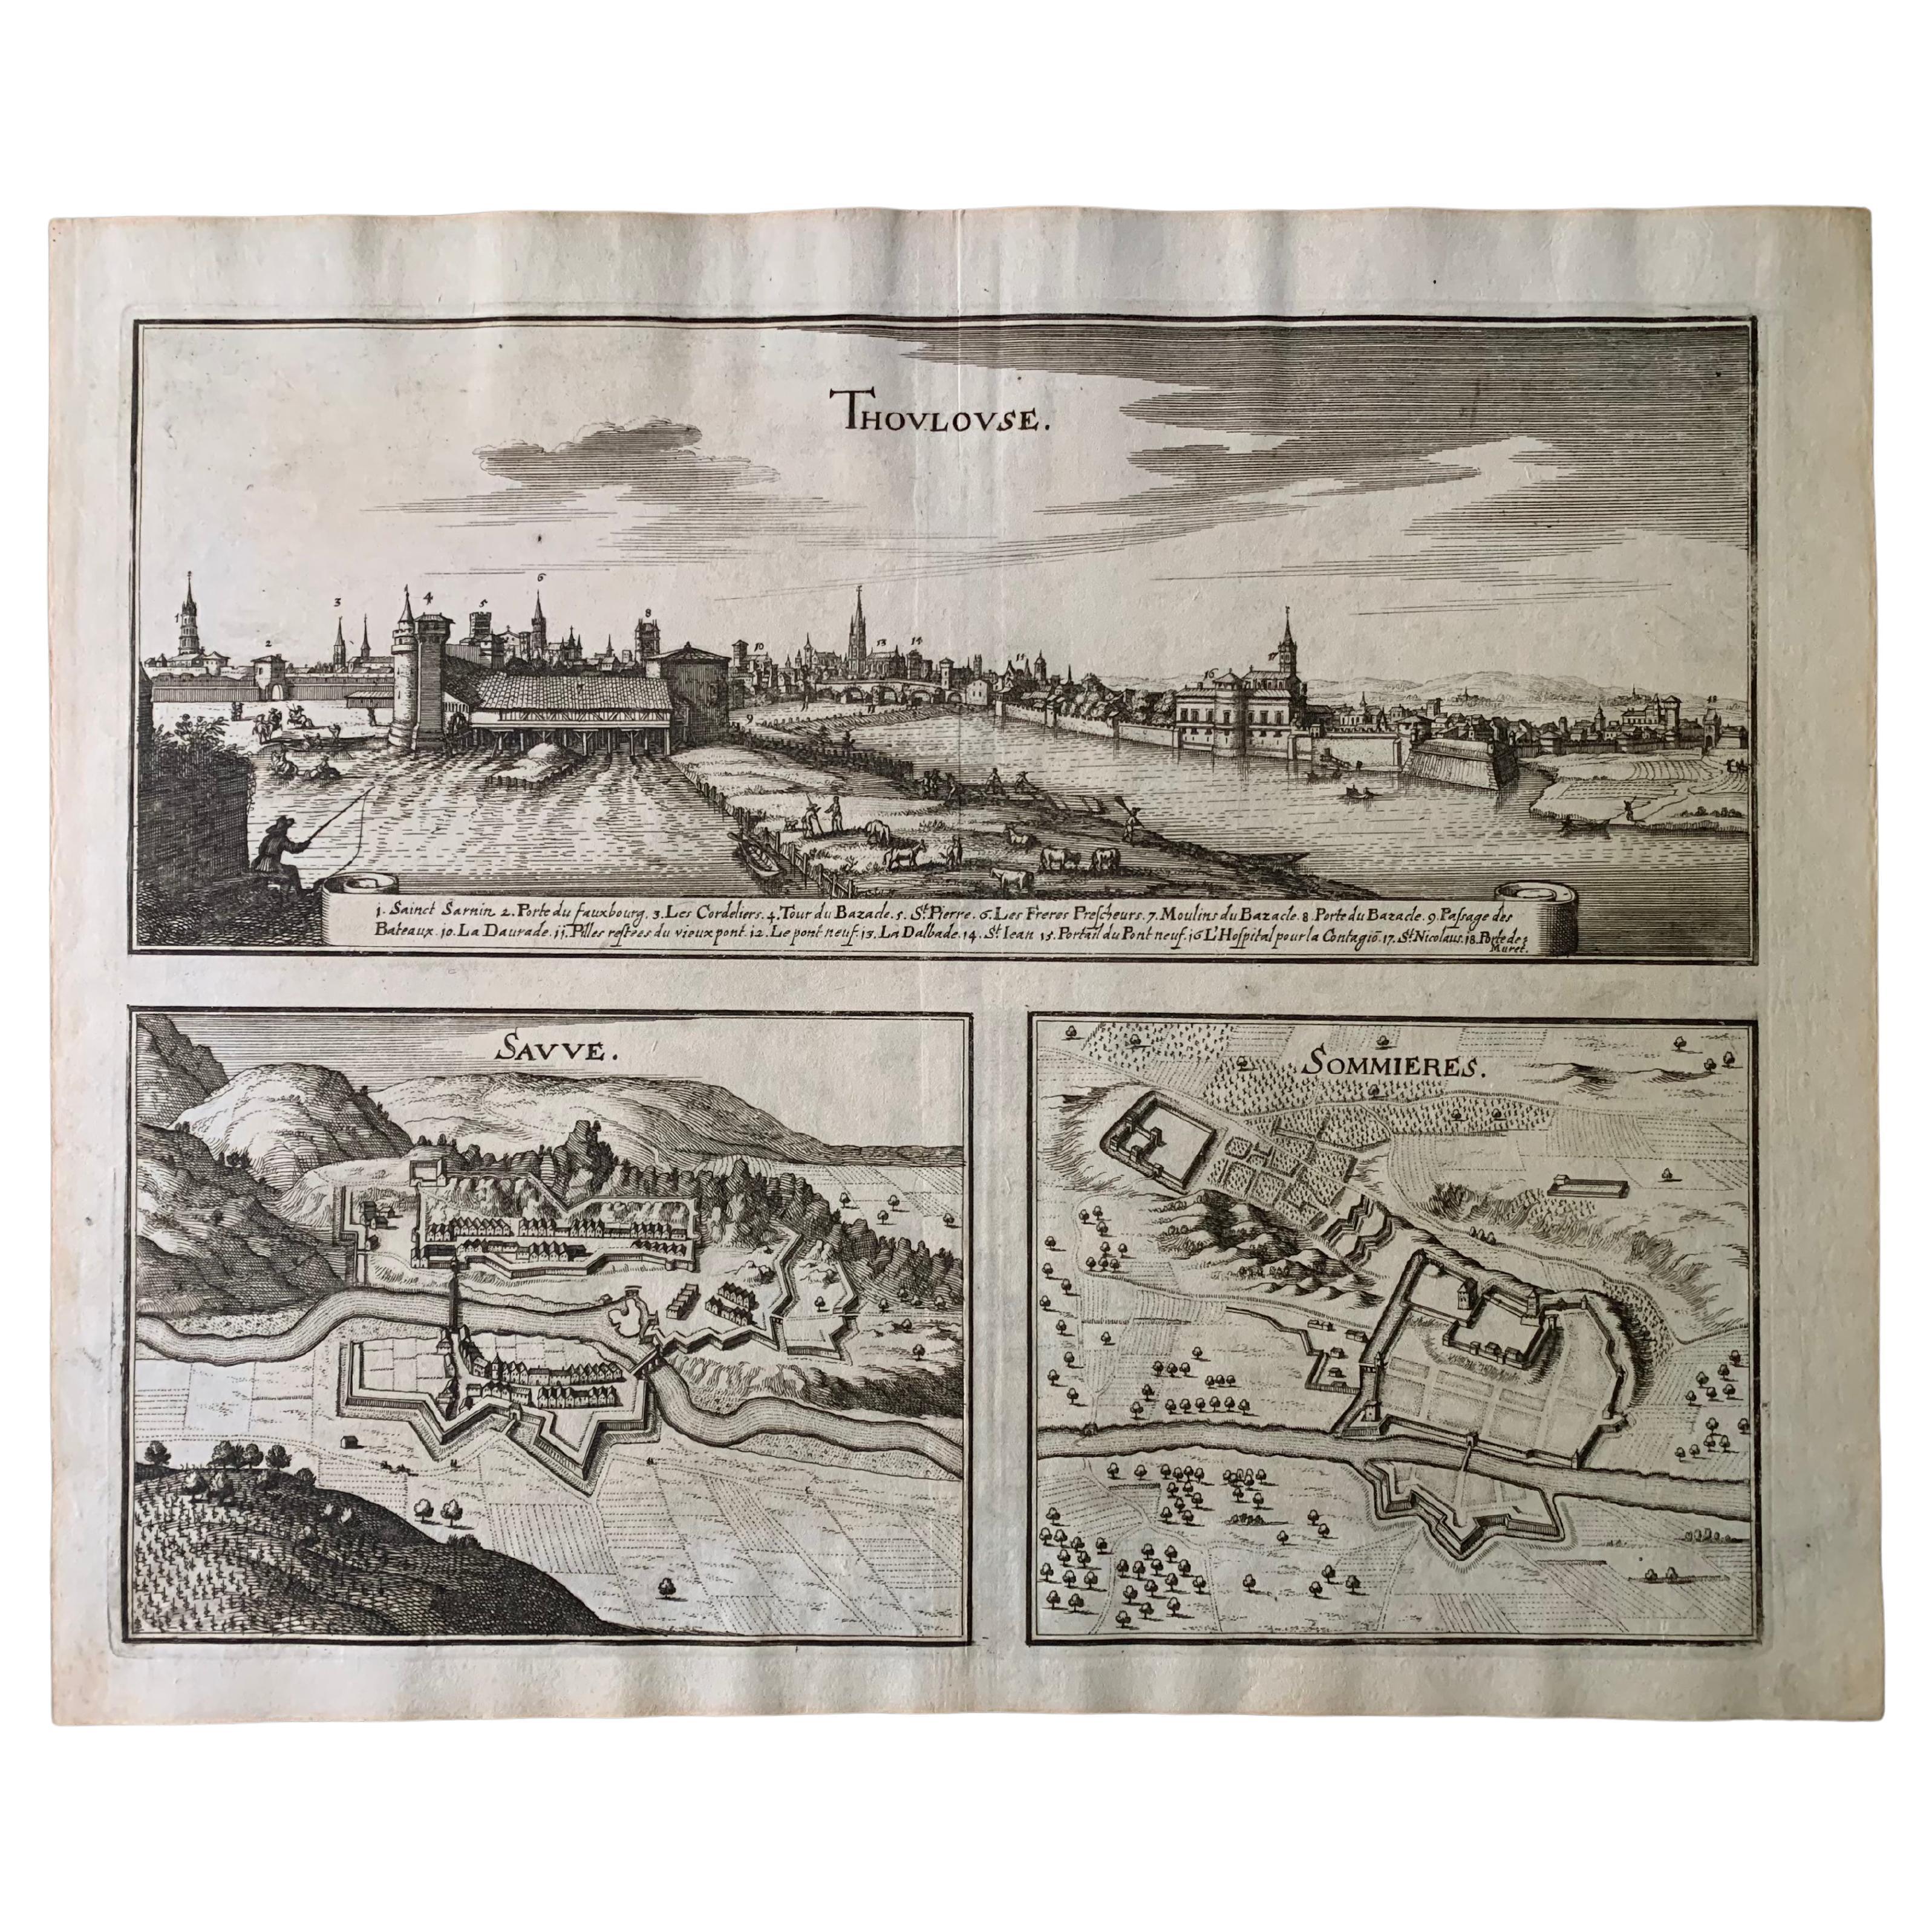 Toulouse, Savve, Sommieres, topografische Karte von Iohan Peeters, 17. Jahrhundert